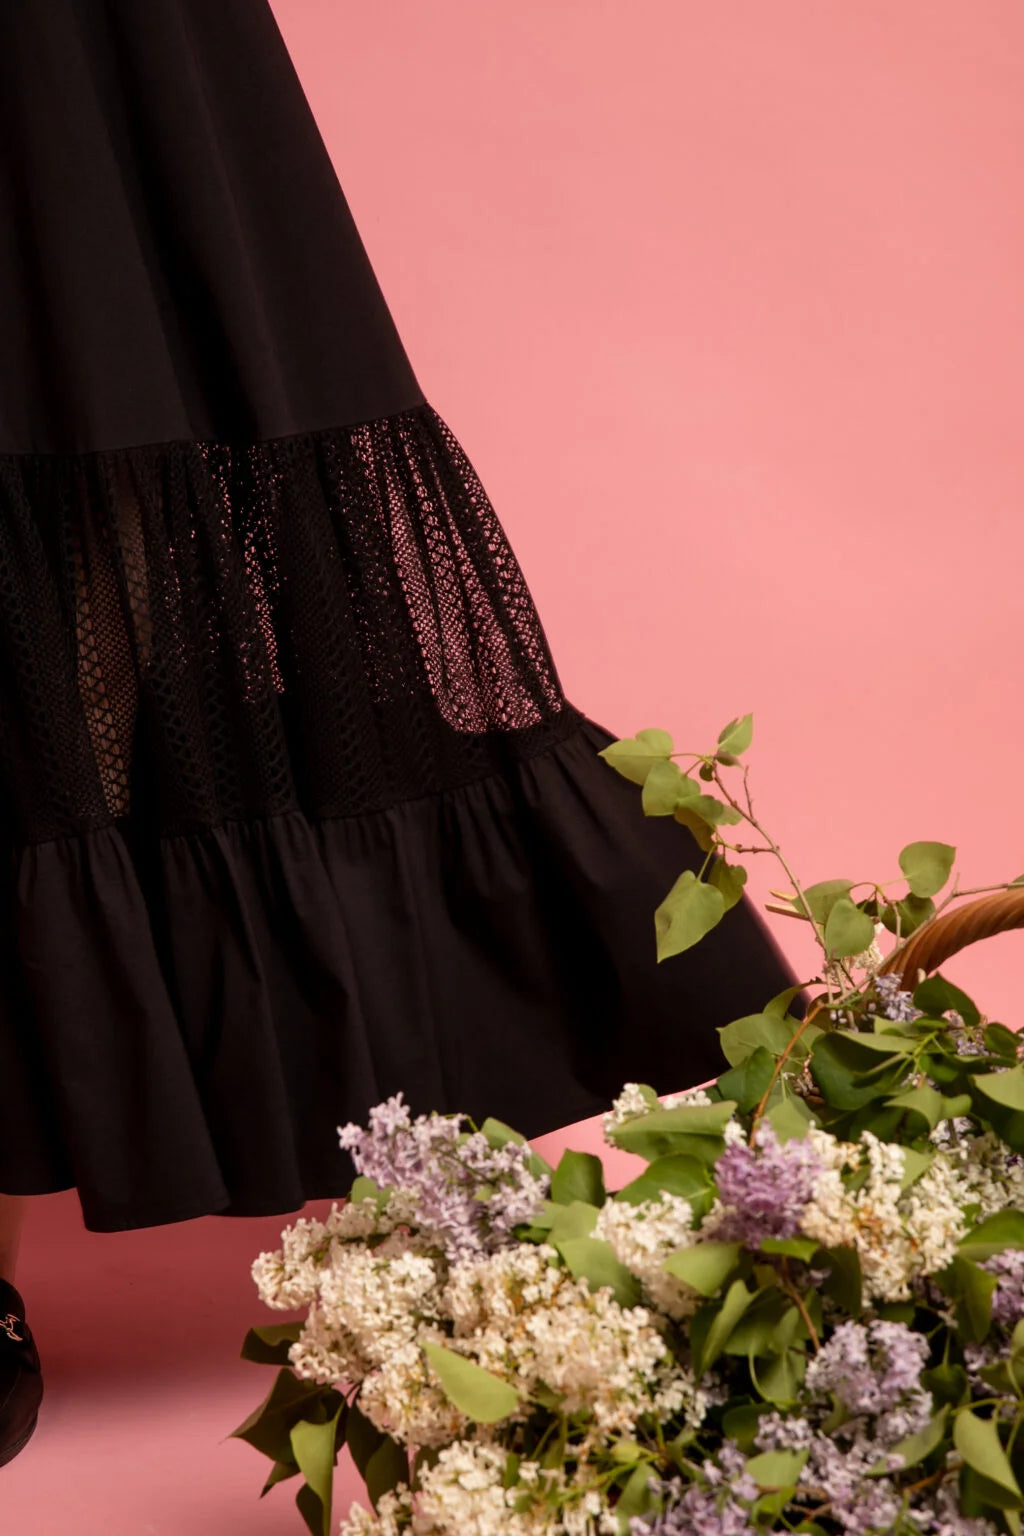 Cotton black dress V-neck and semi-transparent skirt